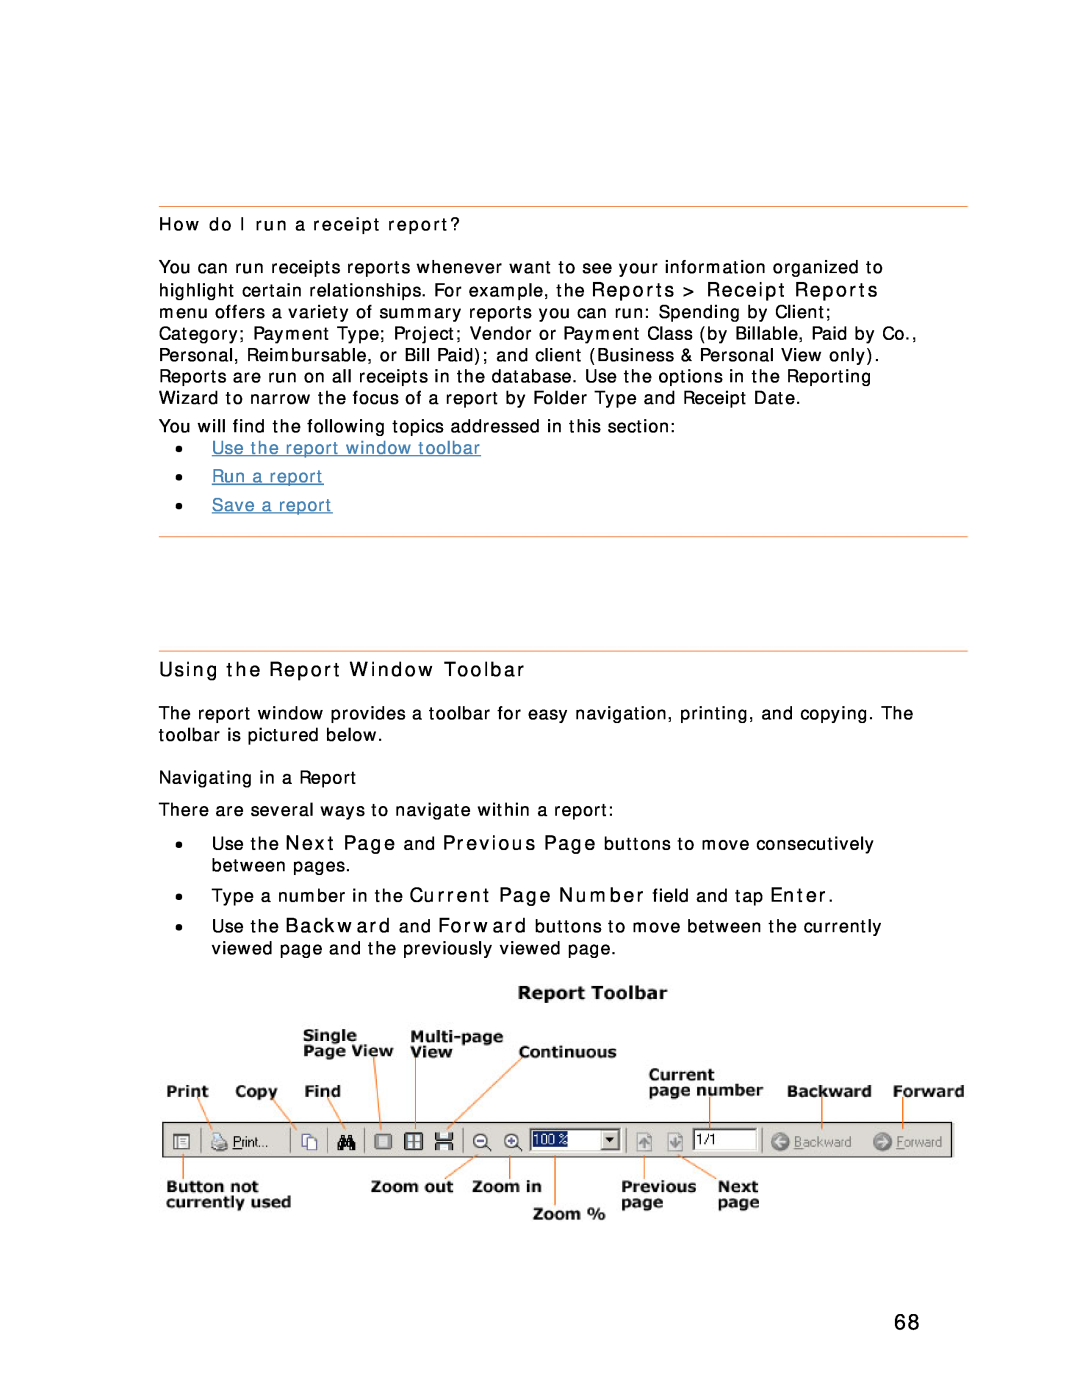 Univex NeatDesk, NeatScan, NeatReceipts manual Using the Report Window Toolbar, How do I run a receipt report? 